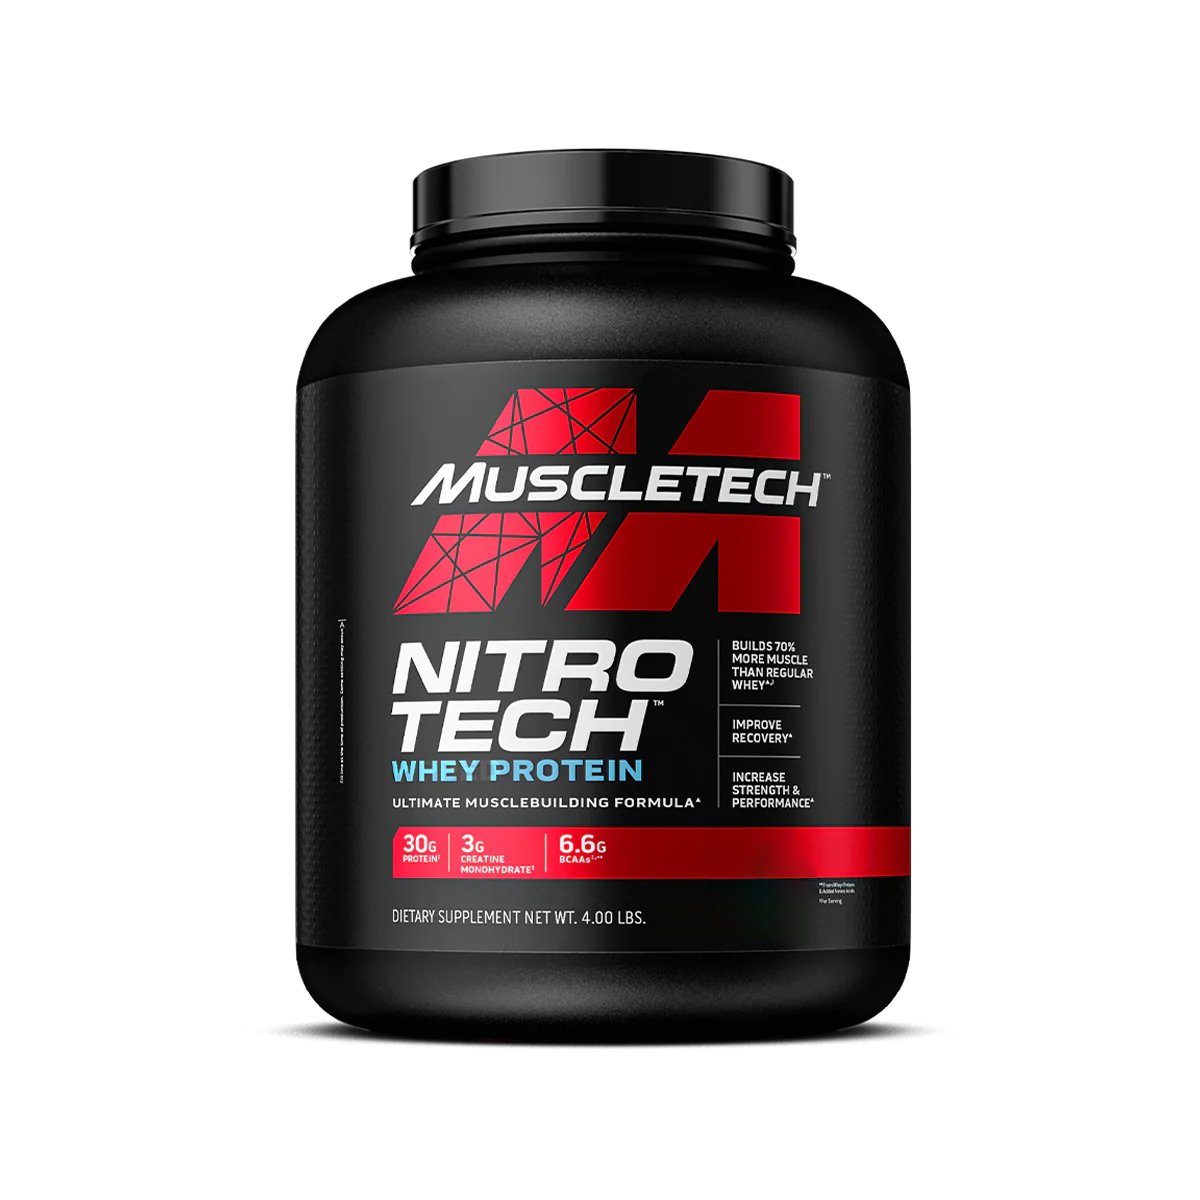 Протеин Muscletech Nitro Tech Whey Protein, 1.81 кг Ваниль,  мл, MuscleTech. Протеин. Набор массы Восстановление Антикатаболические свойства 